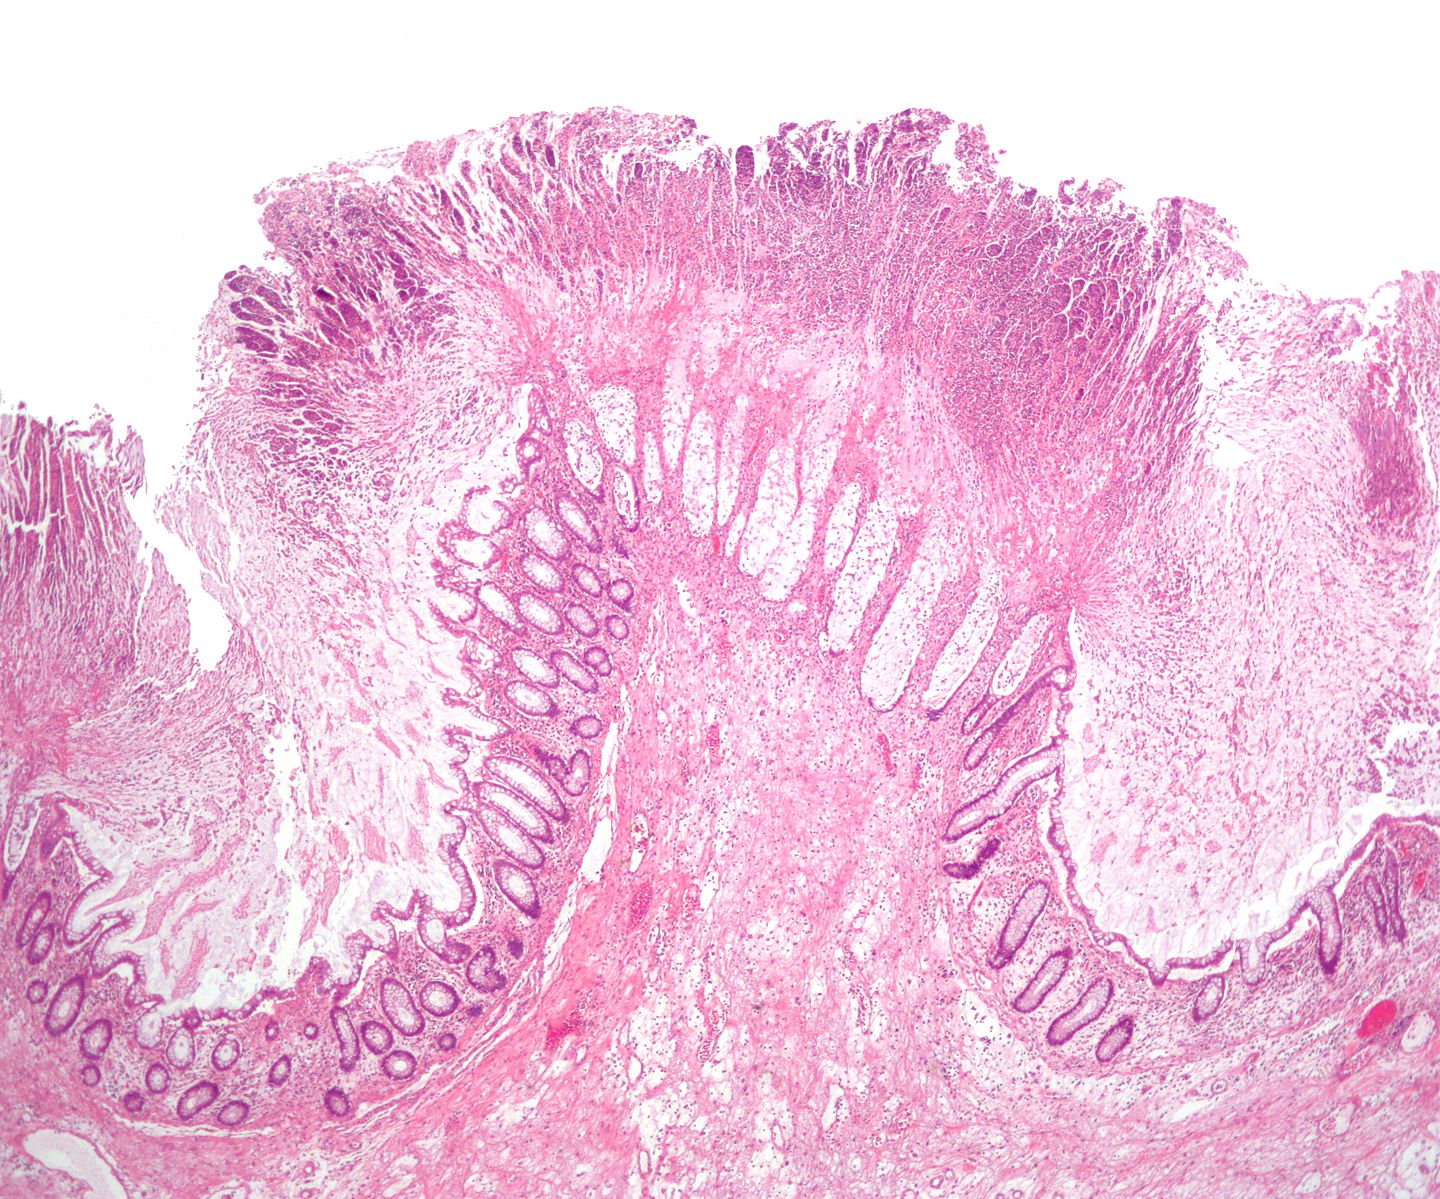 Pseudomembranous colitis. H& E staining showing pseudomembranes in Clostridium colitis [37]